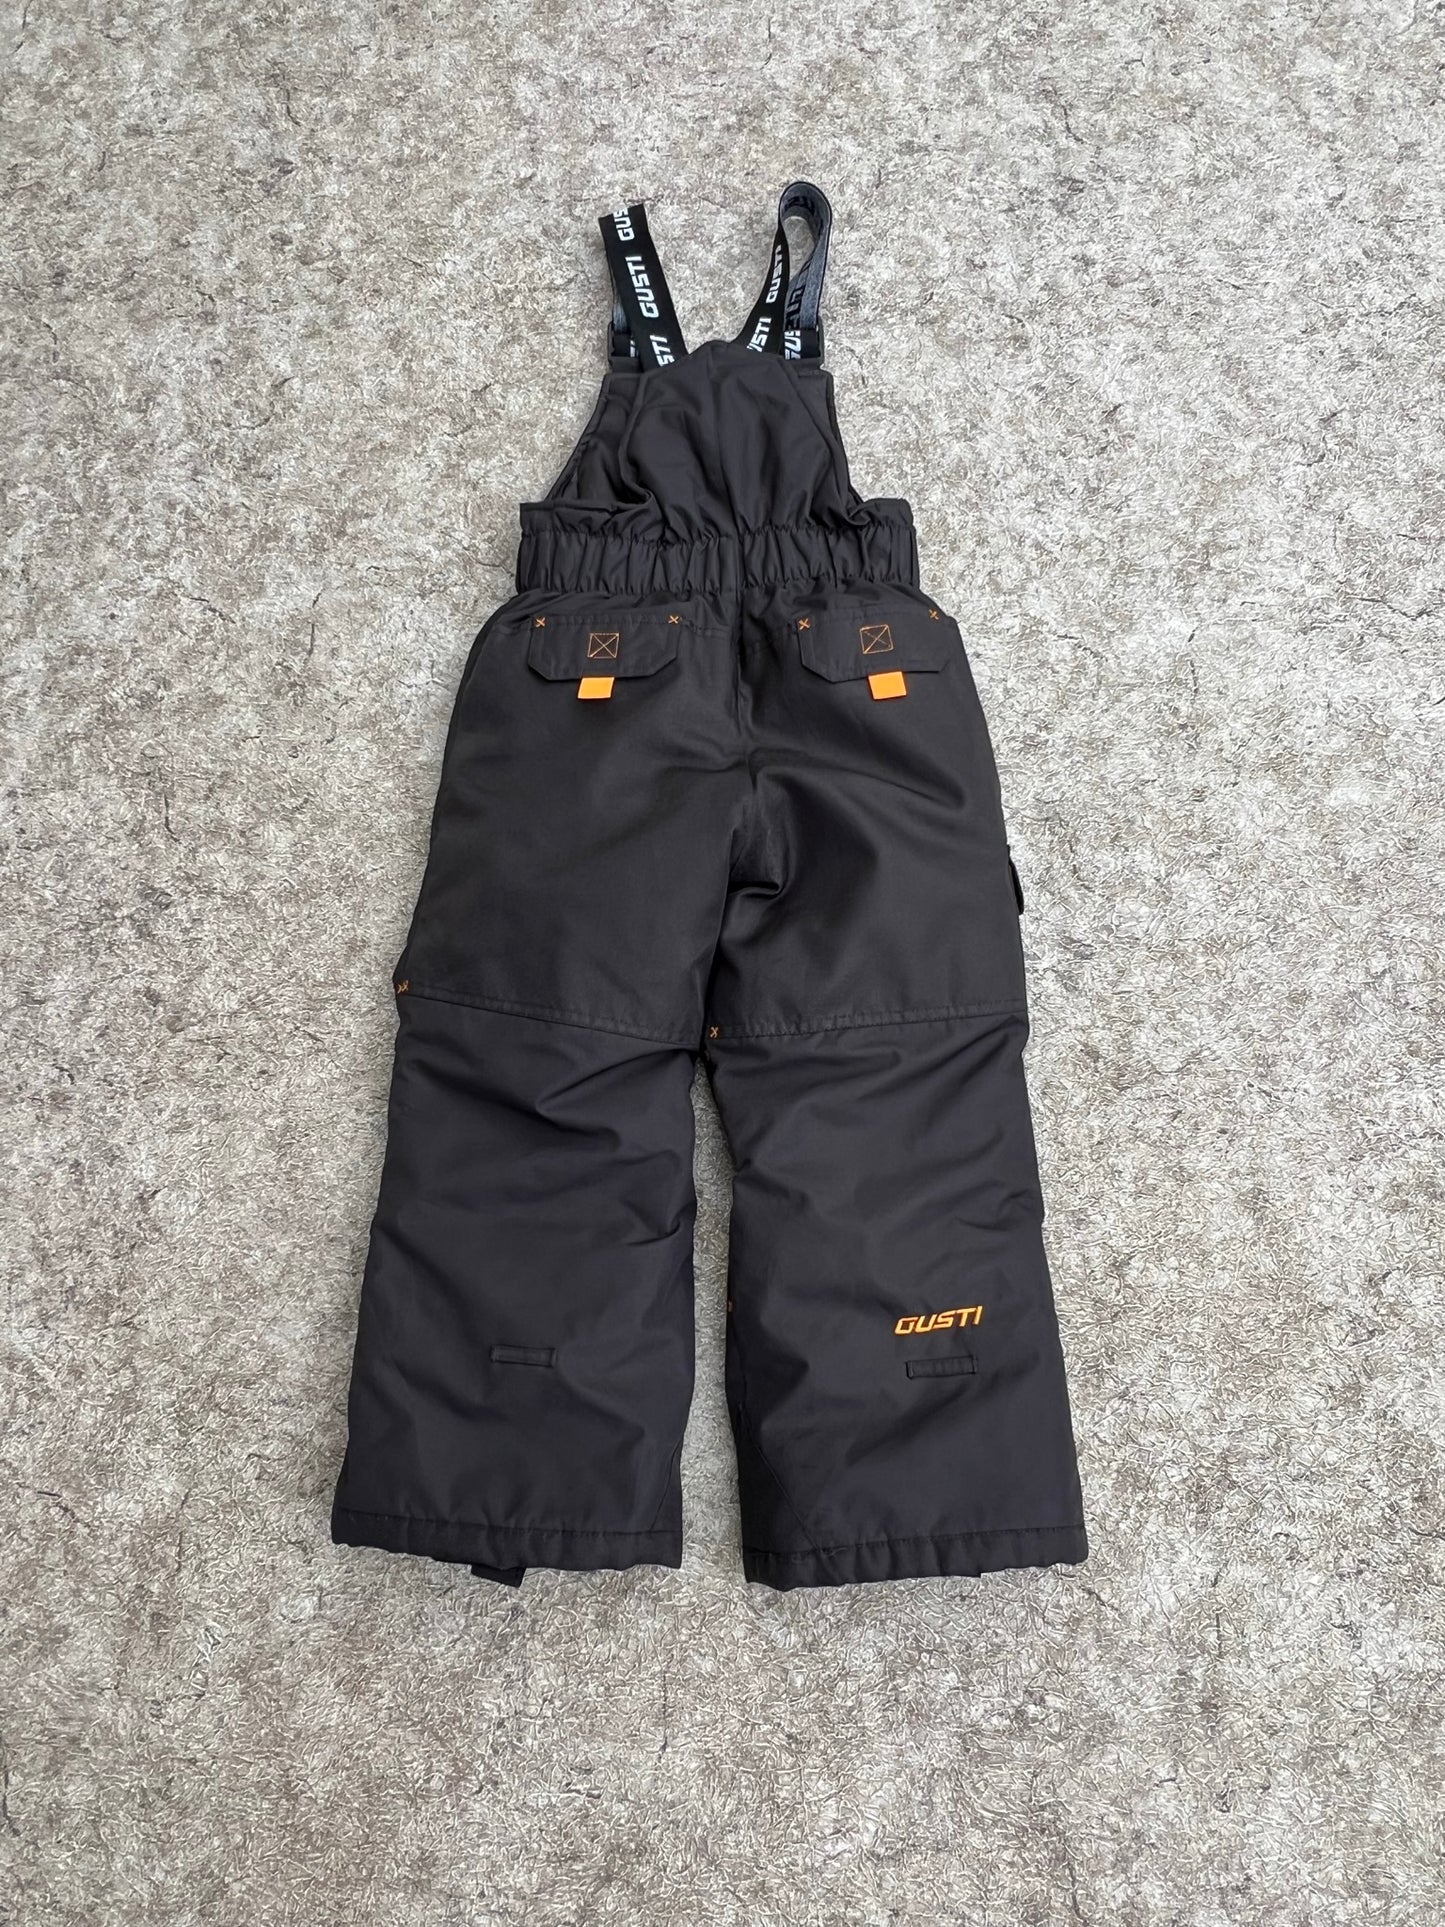 Snow Pants Child Size 5-6 Gusti Smoke Grey and Orange With Bib